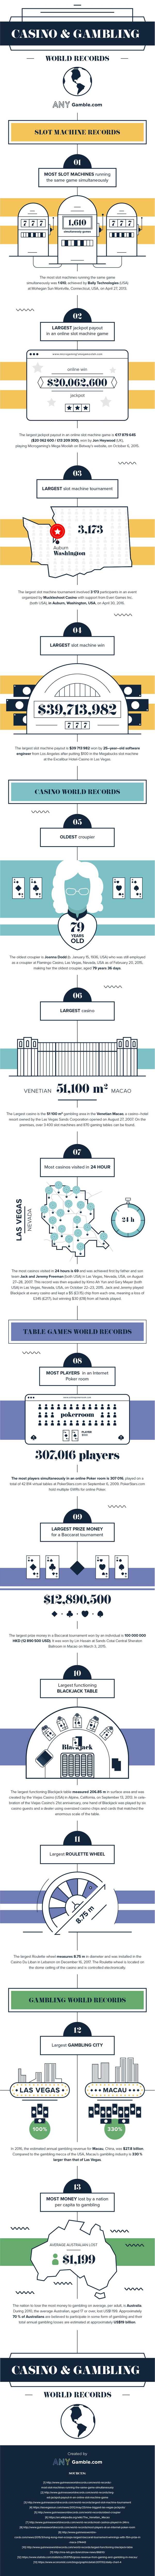 13 Amazing World Records in Gambling